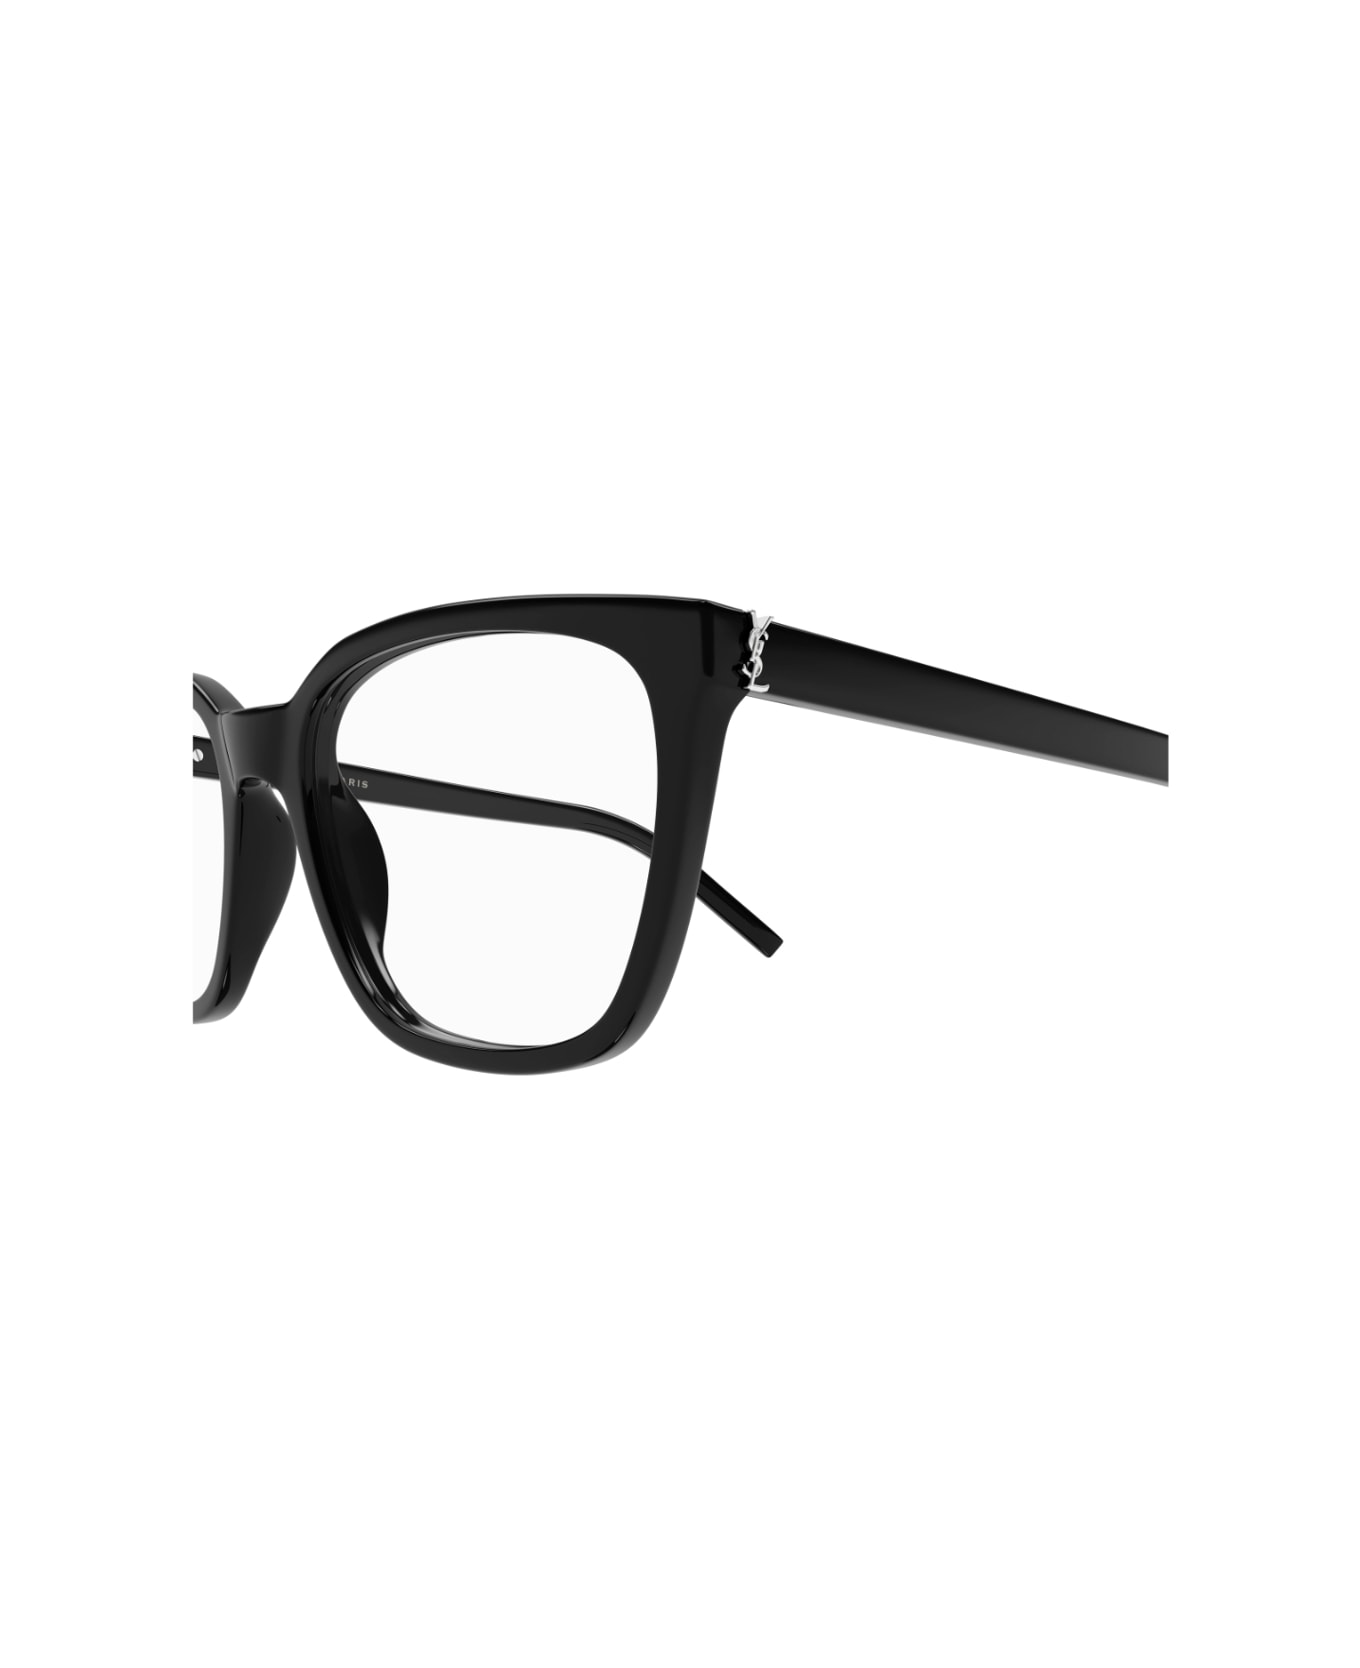 Saint Laurent Eyewear SL M129 001 Glasses